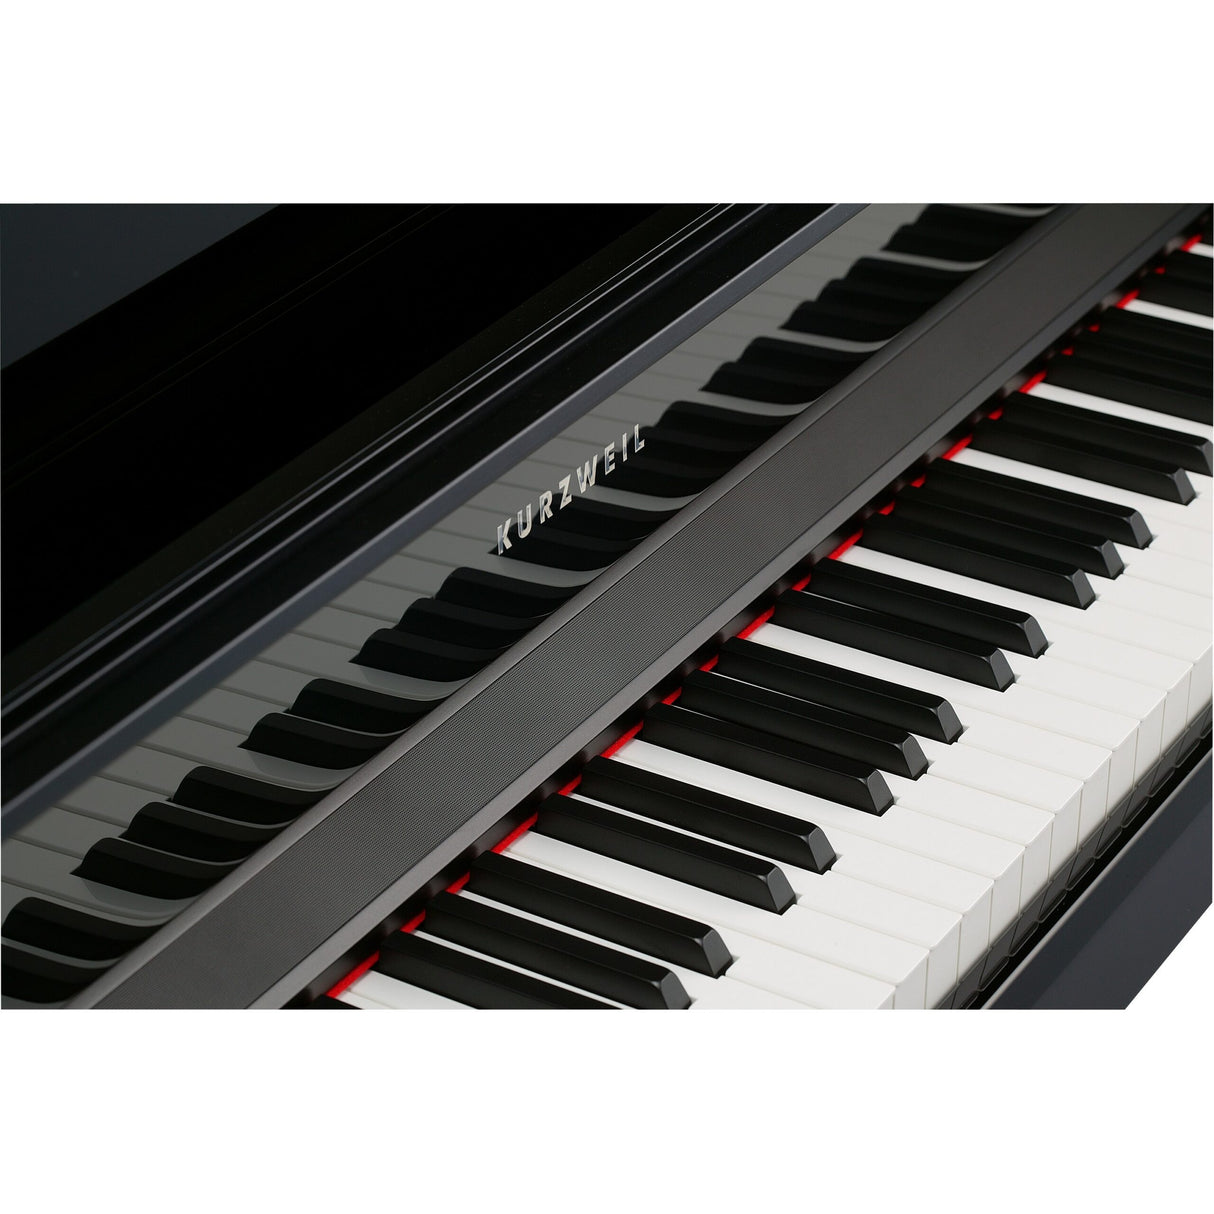 Kurzweil CUP1 88-Key Digital Piano, Ebony Polish